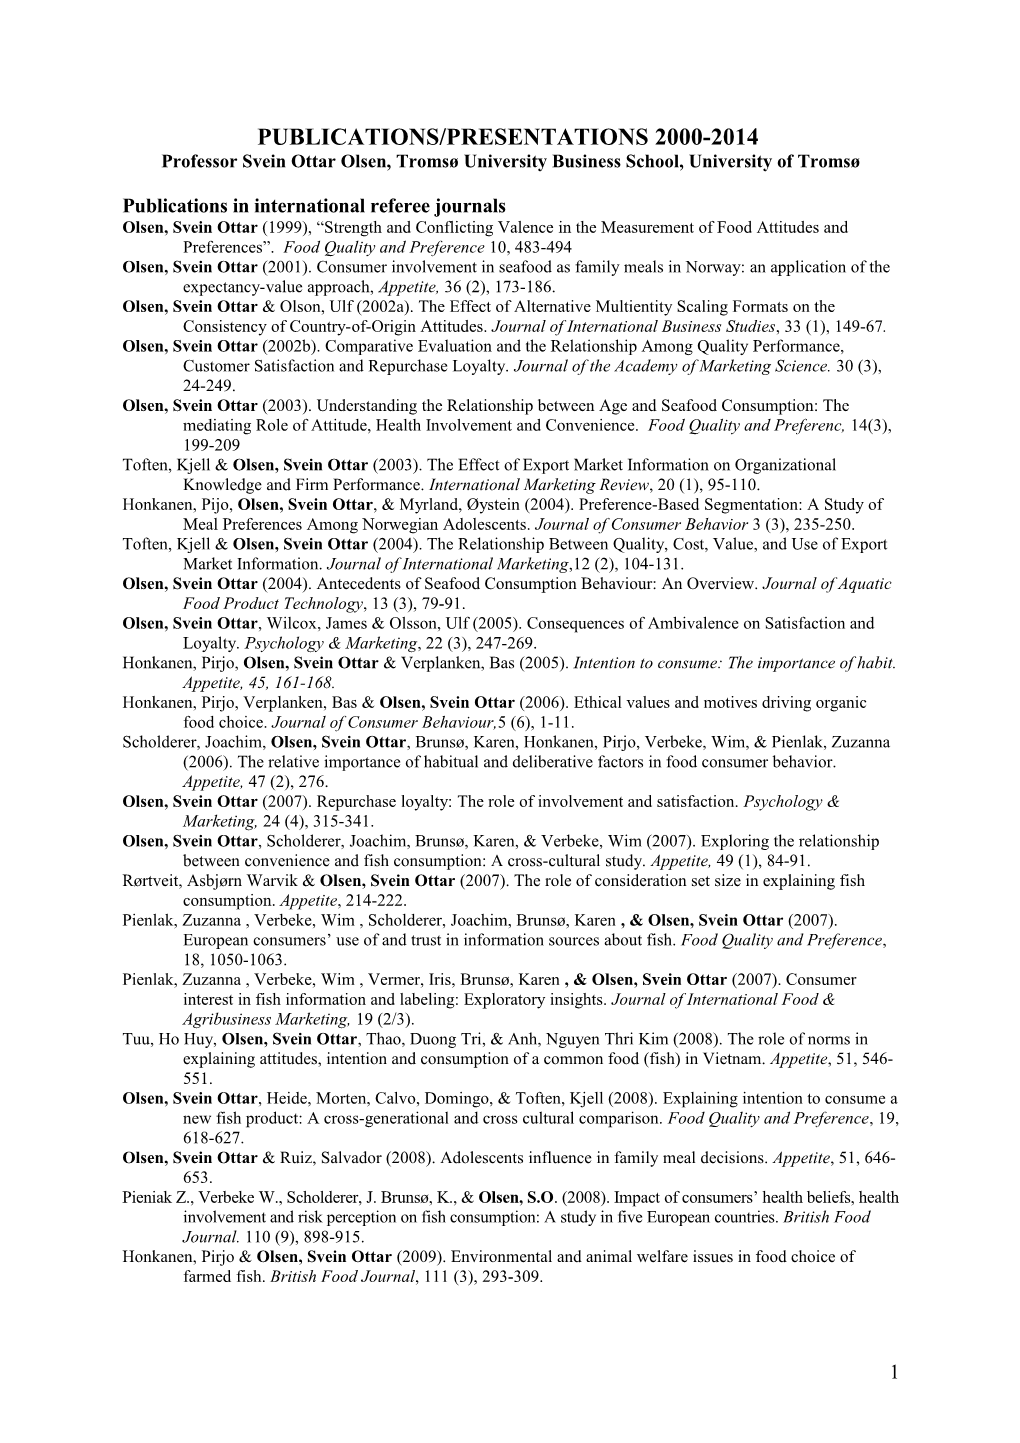 Selected Publications / Presentations 2000-2005